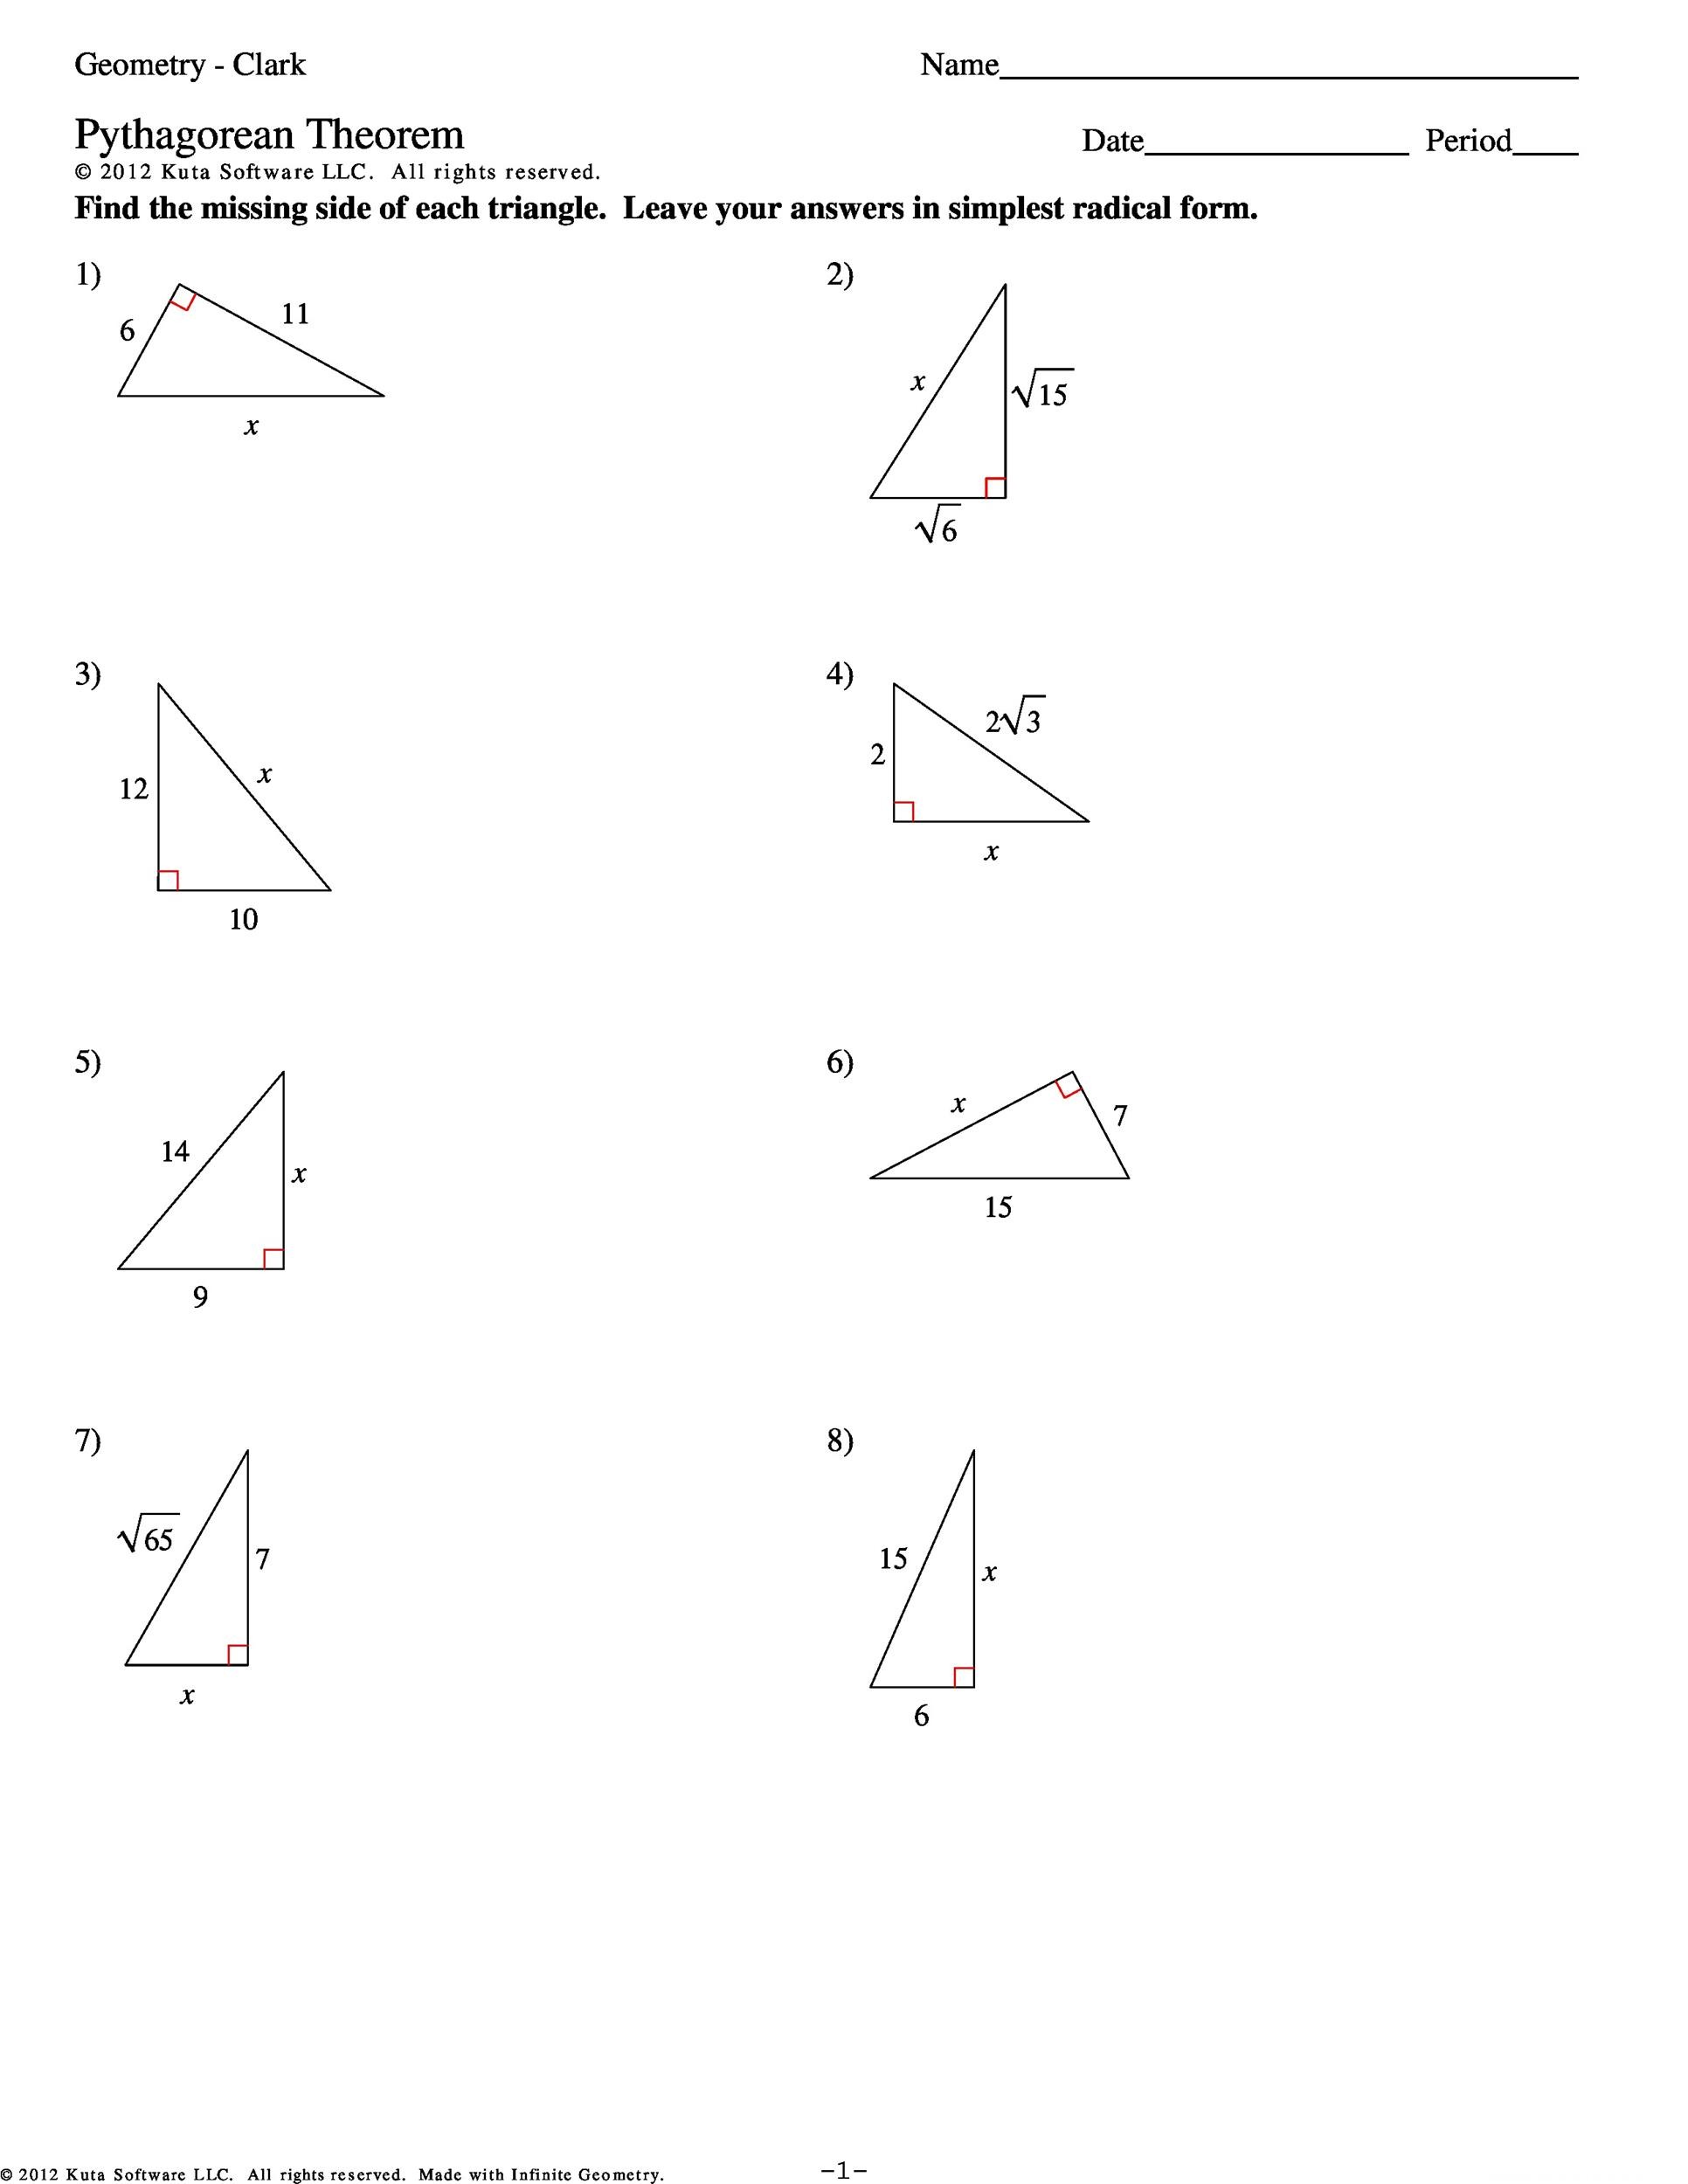 triangle-sum-theorem-worksheet-kuta-breadandhearth